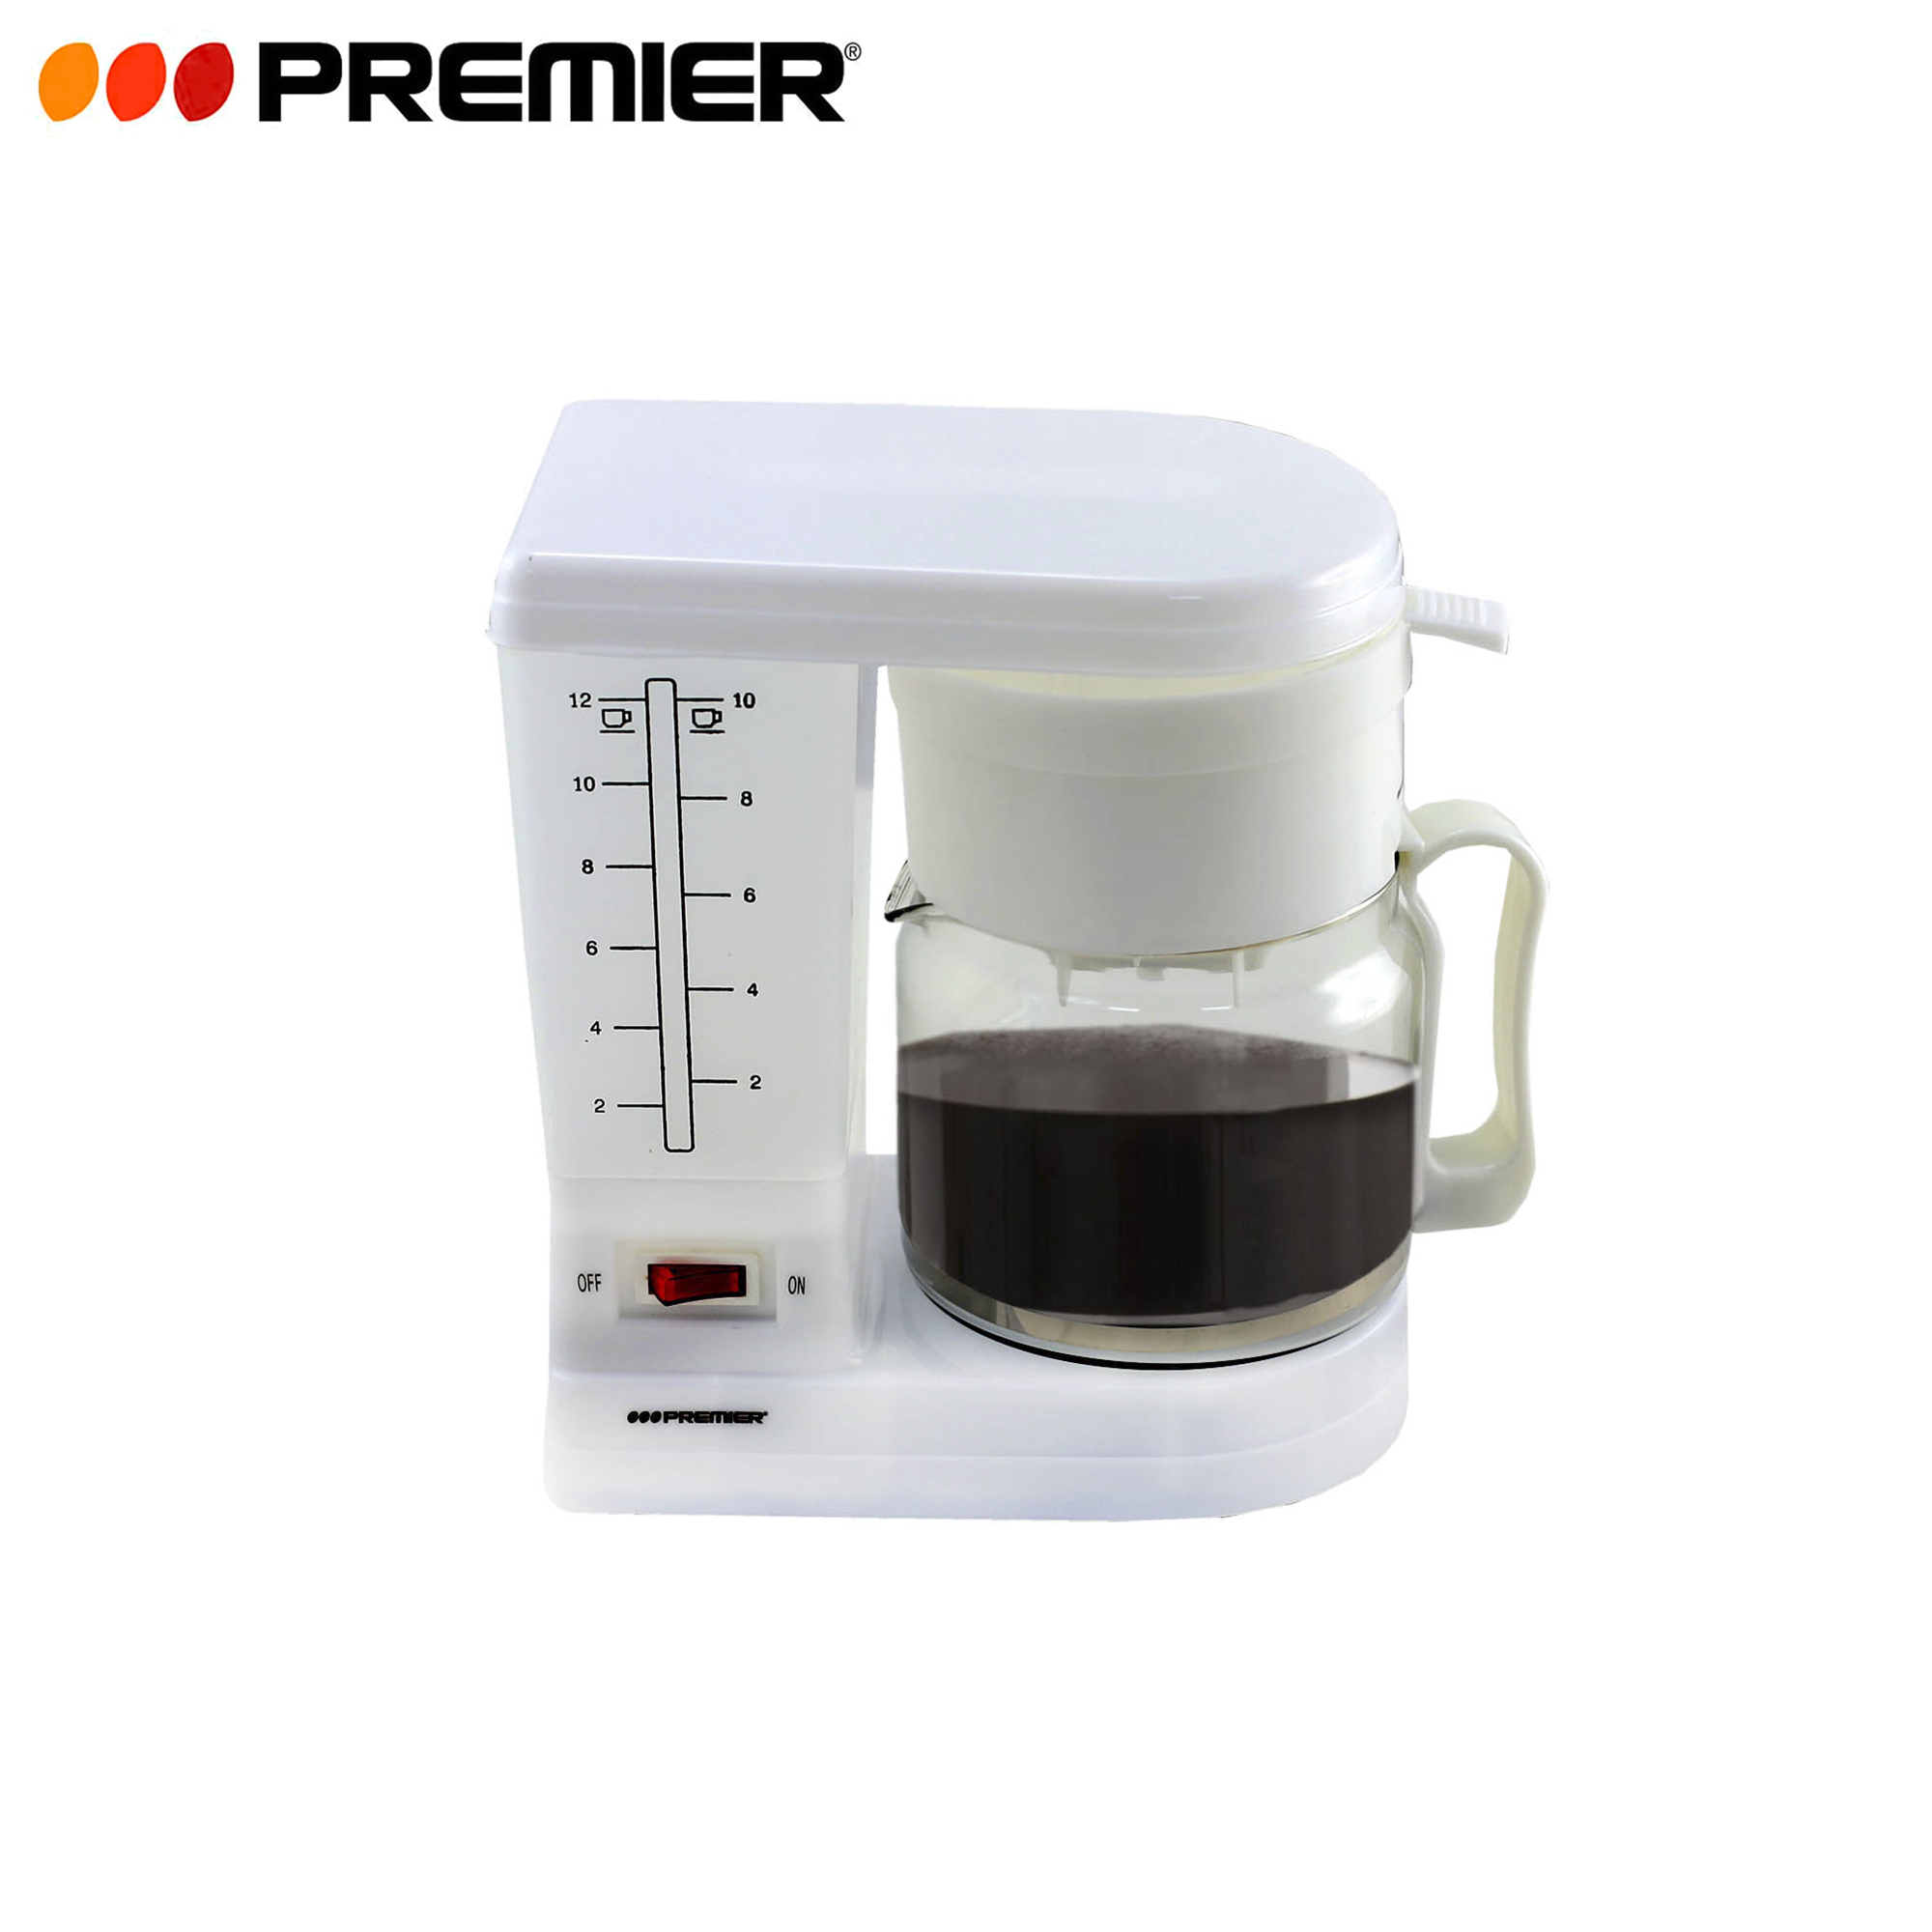 Cafetera 12 tazas Premier negro - Multimax Store